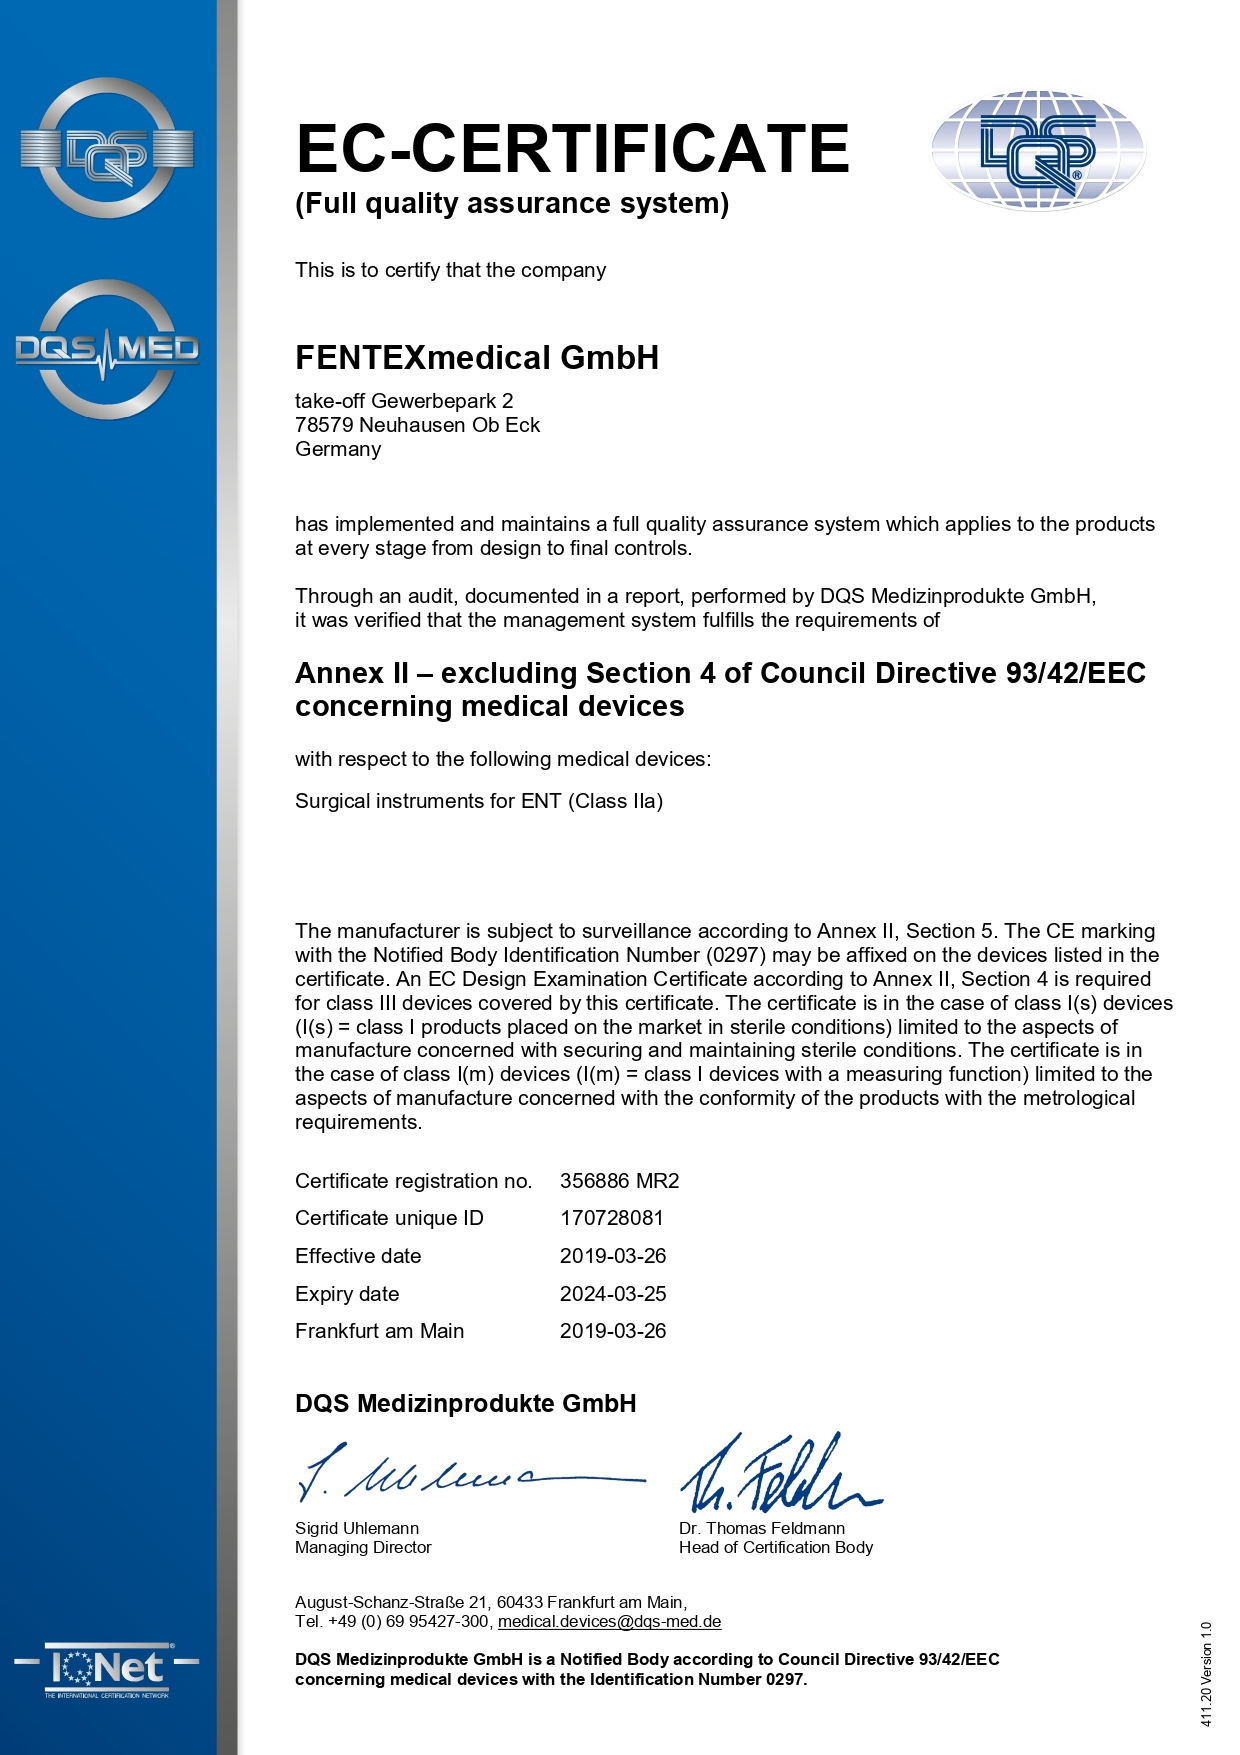 EC certificate EN thumb 240x340px